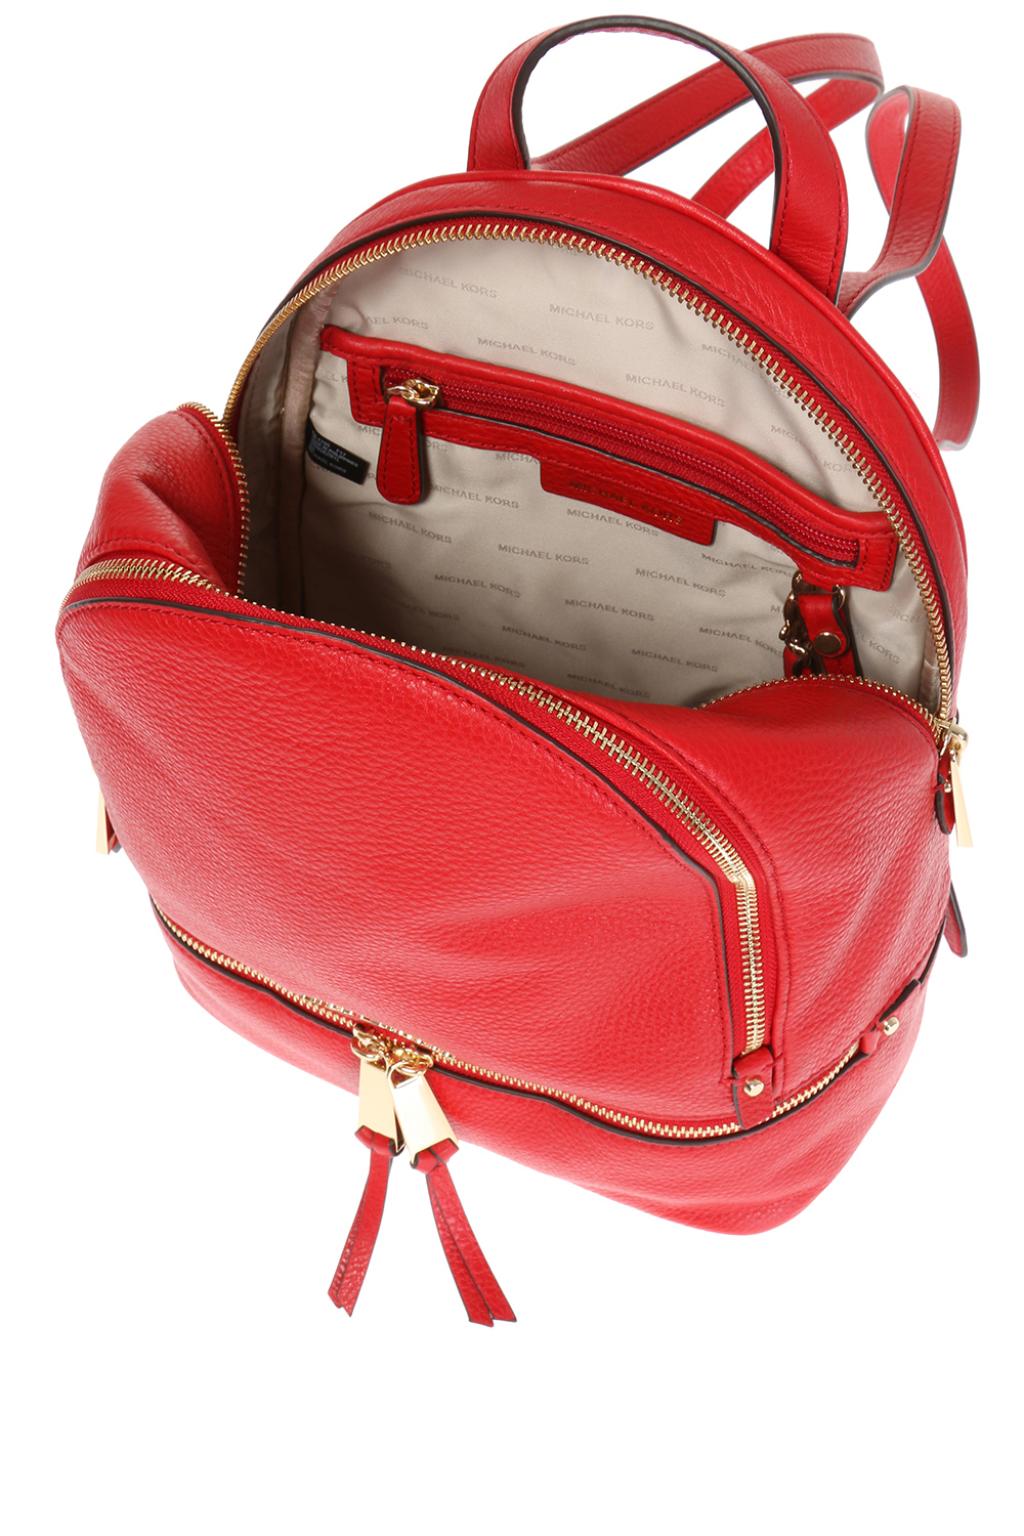 Michael kors red backpack  Michael kors mini backpack, Red backpack, Michael  kors rhea backpack